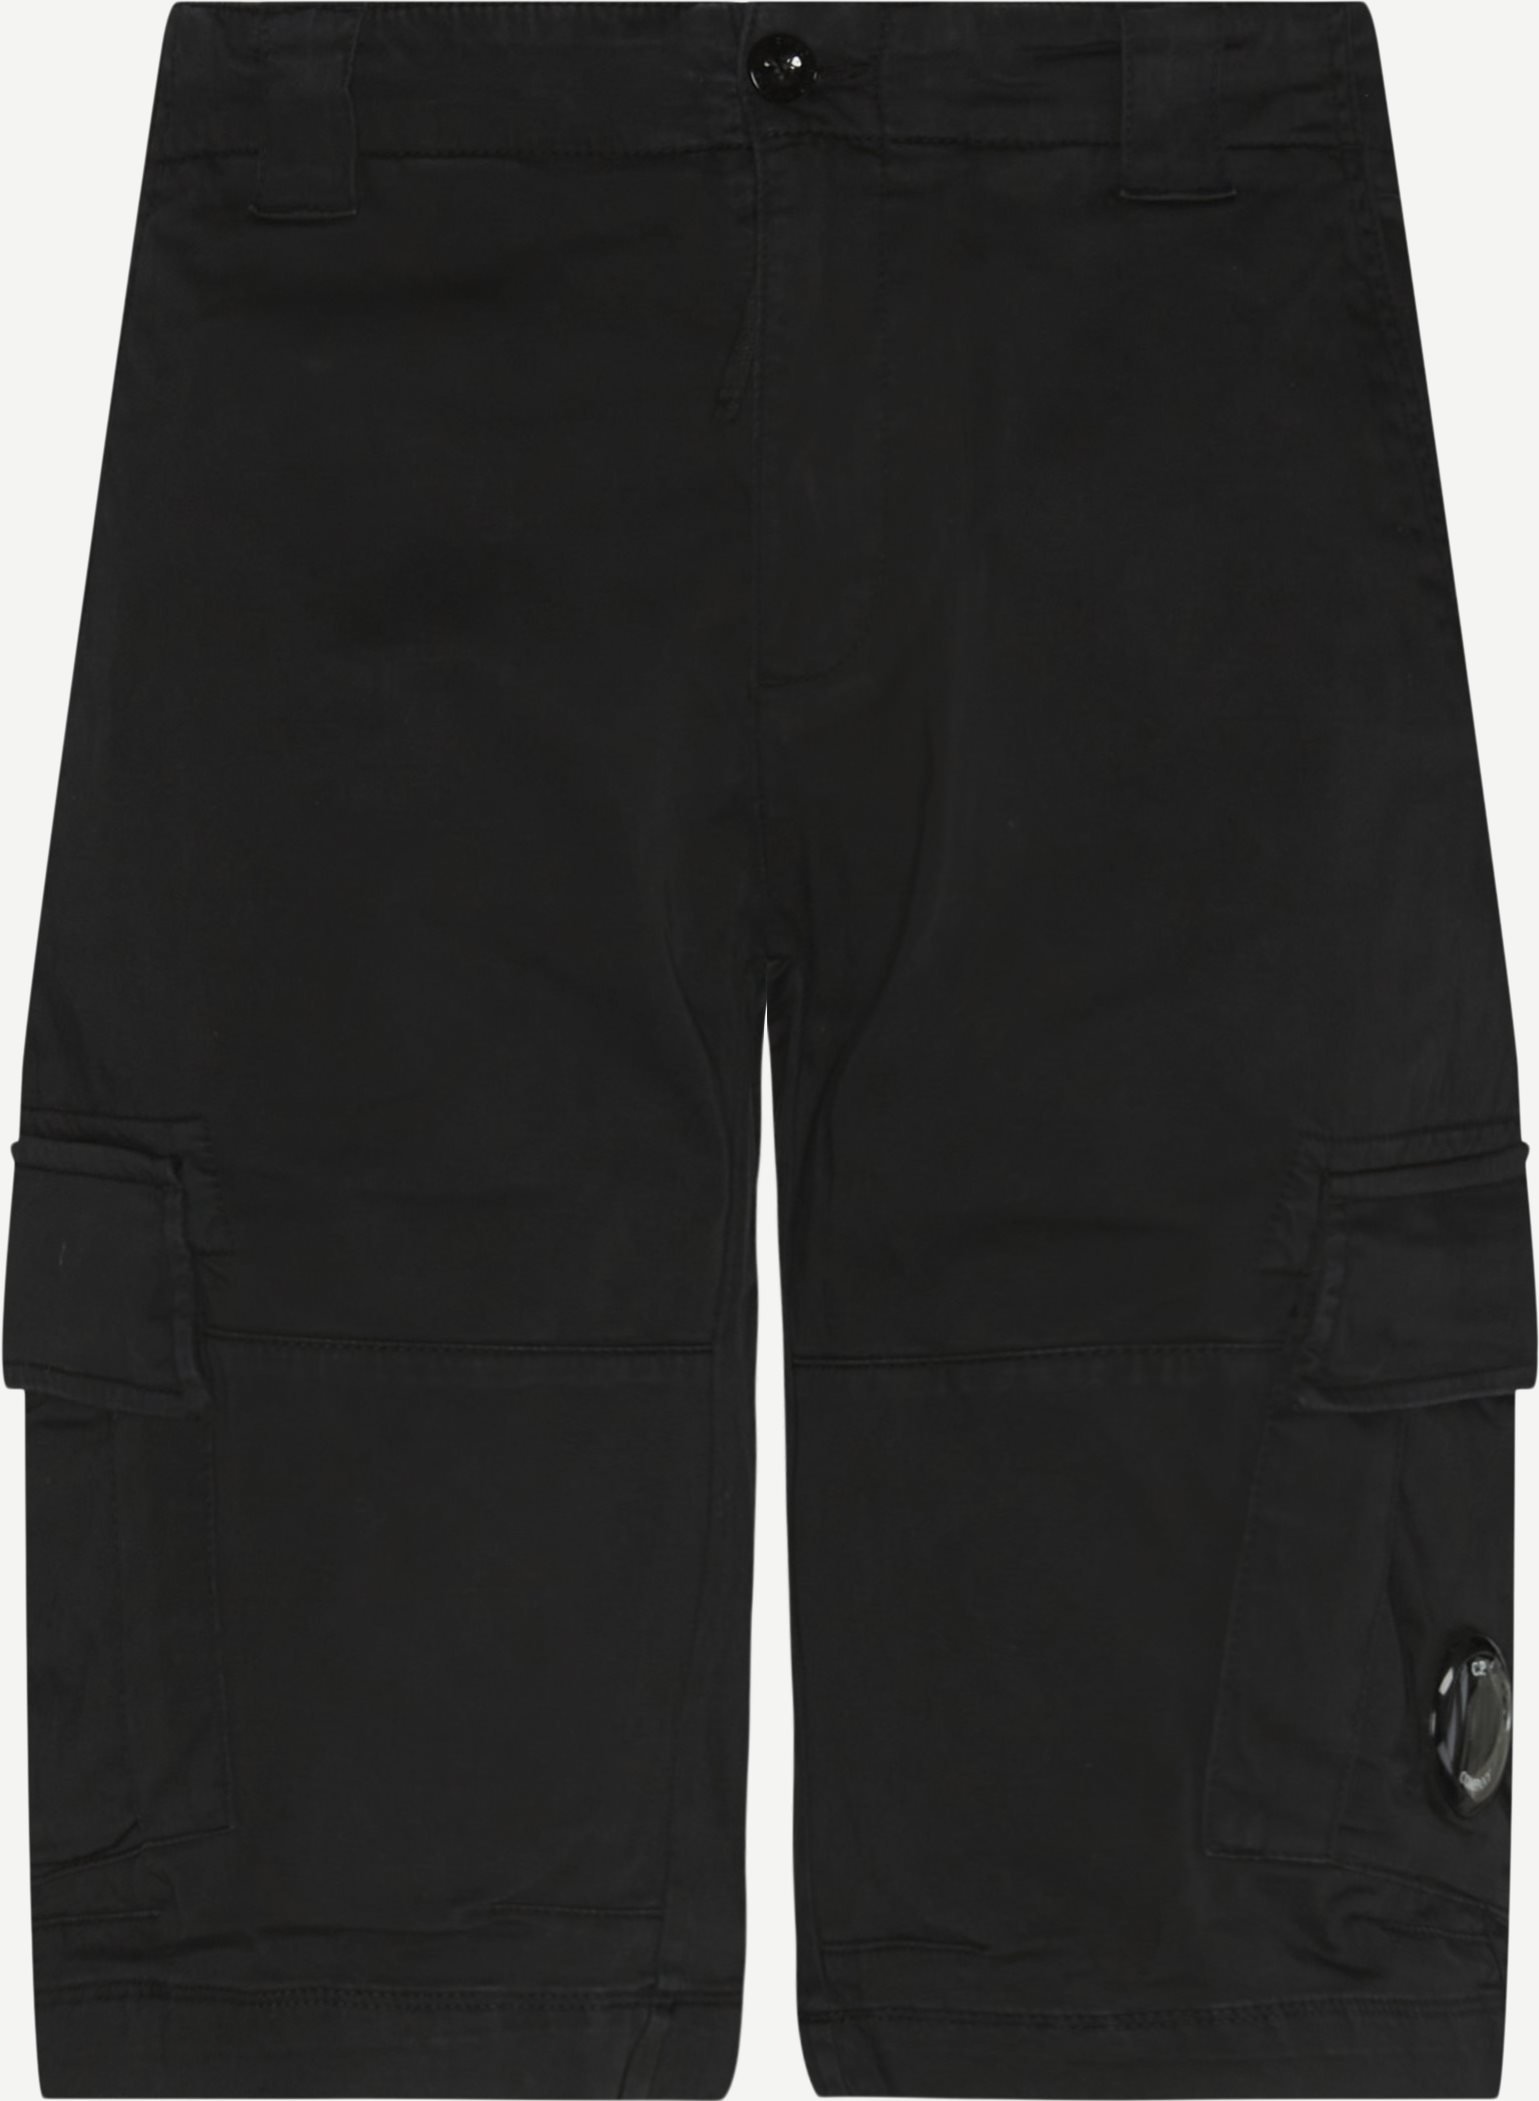 Cargo Stretch Shorts - Shorts - Regular fit - Black